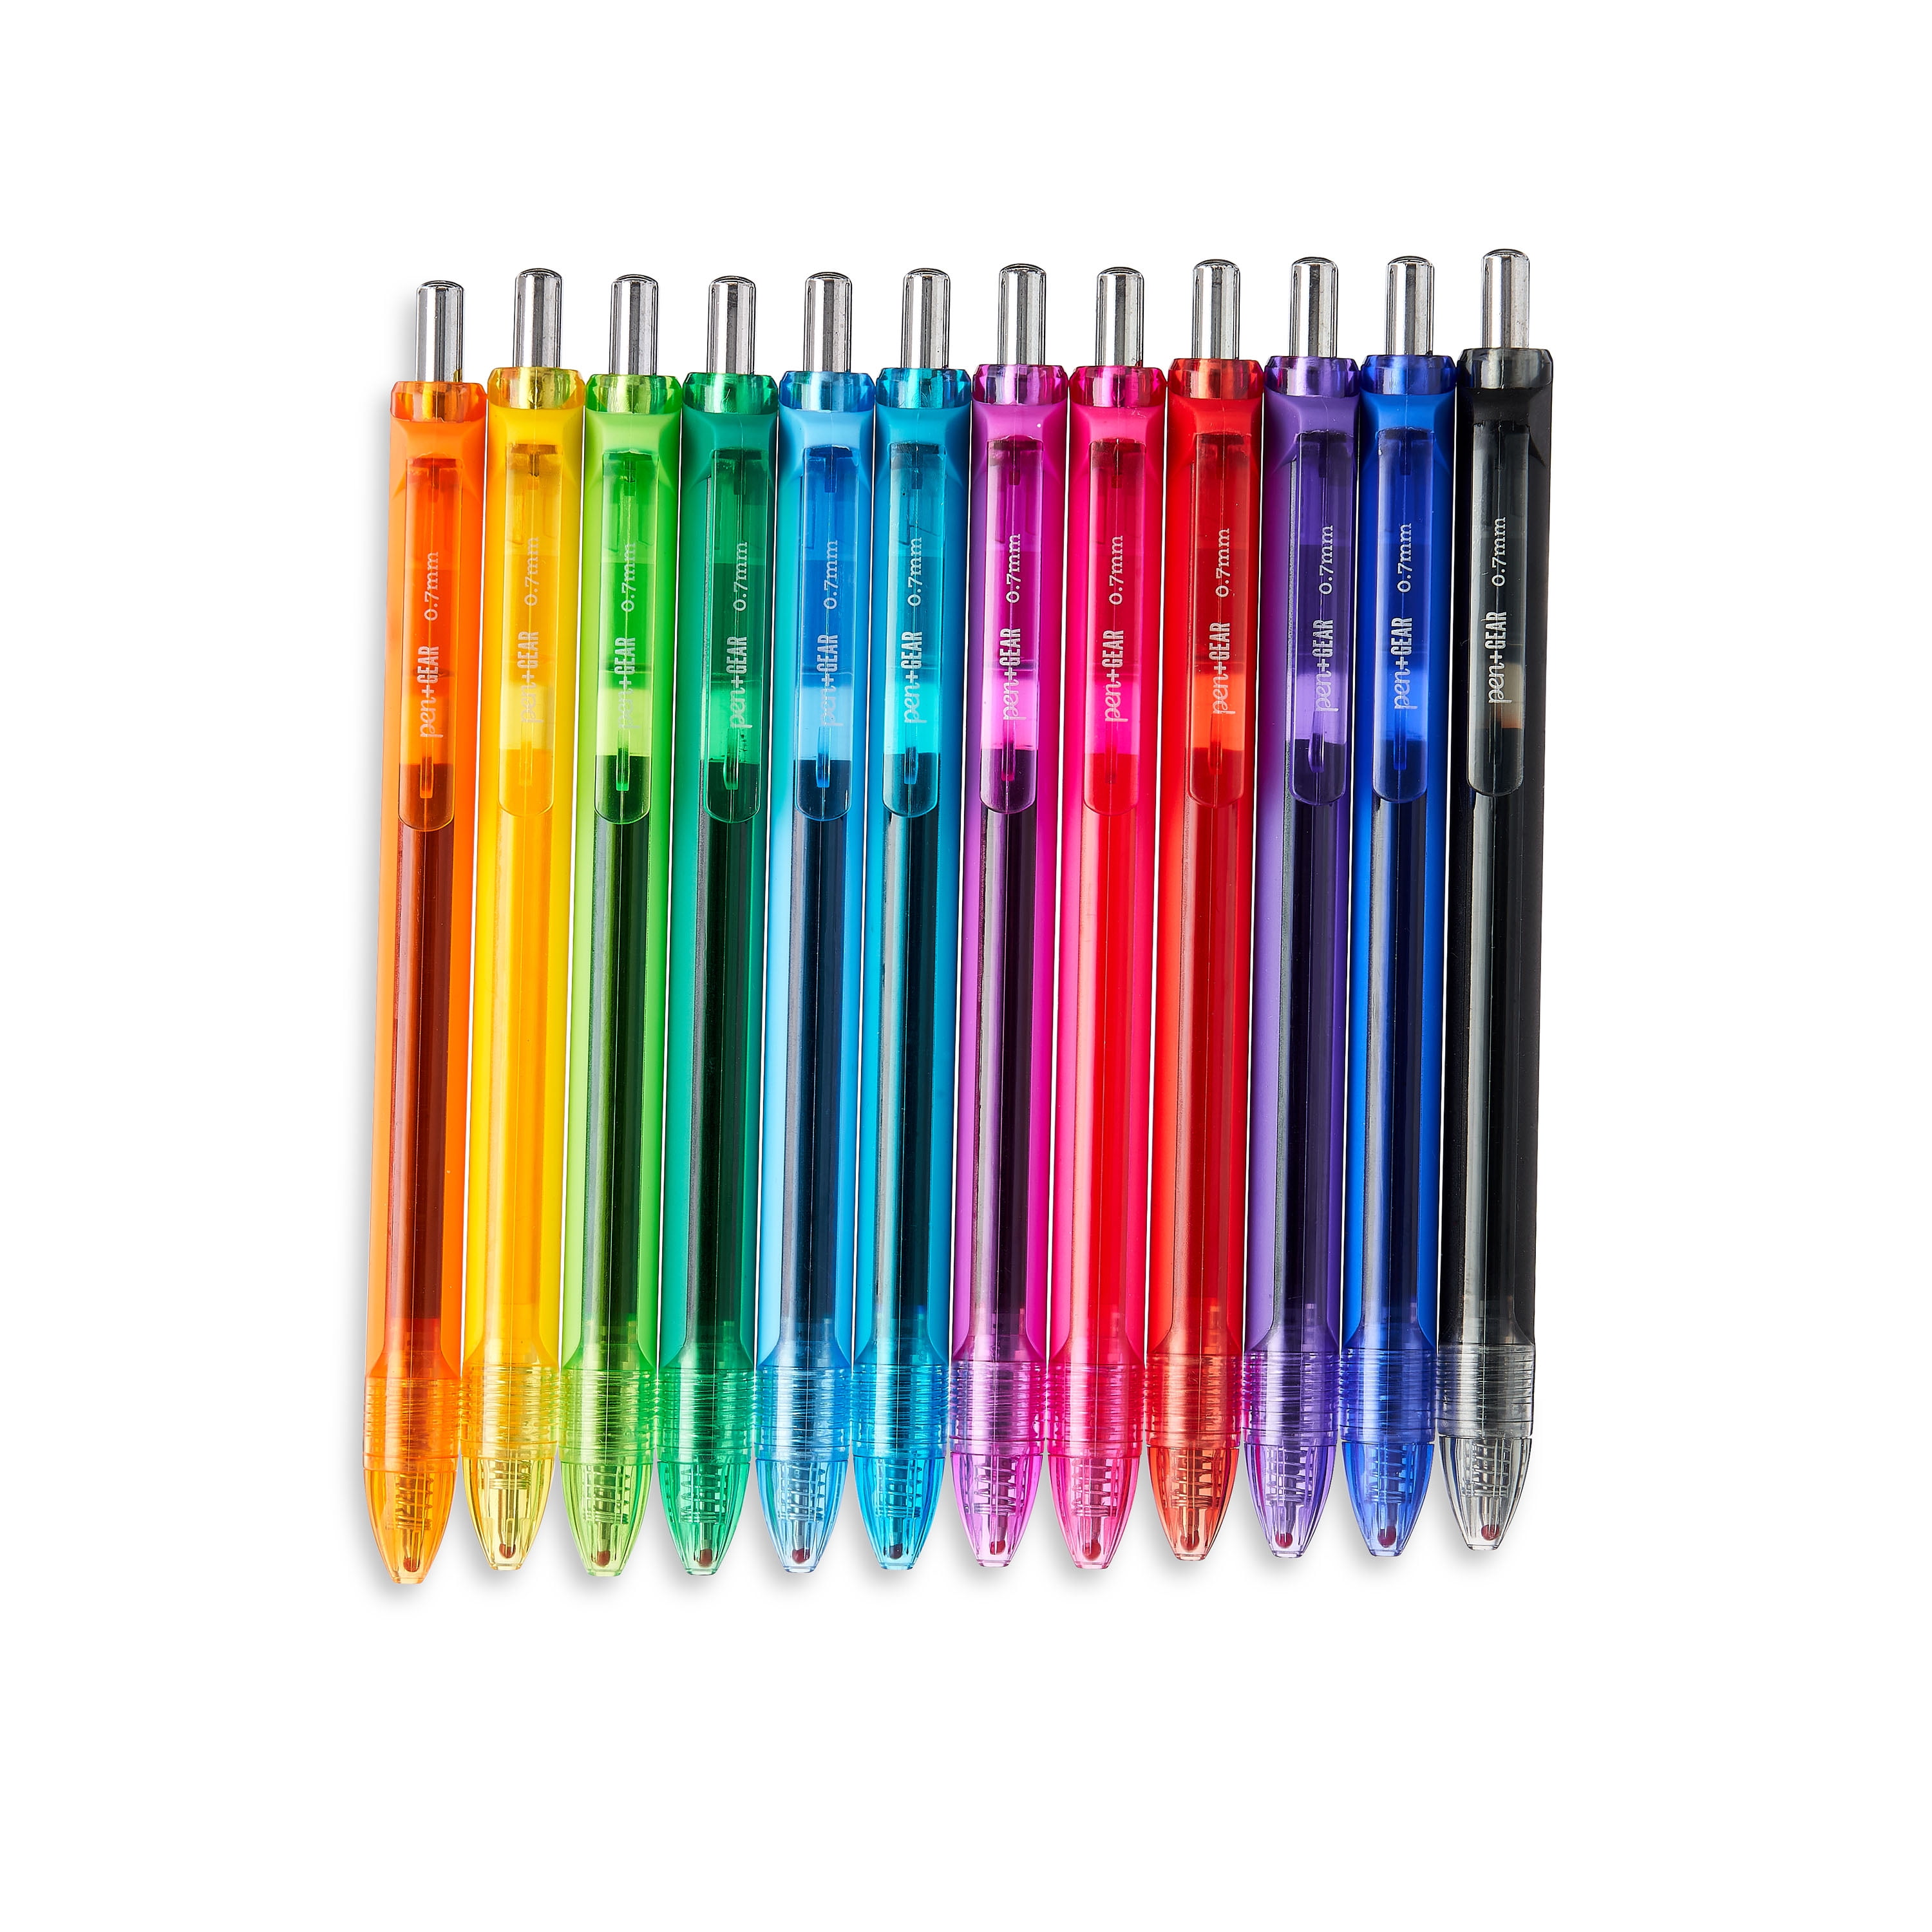 Pen+Gear Retractable Gel Pens, Assorted Colors, 24 Count - Yahoo